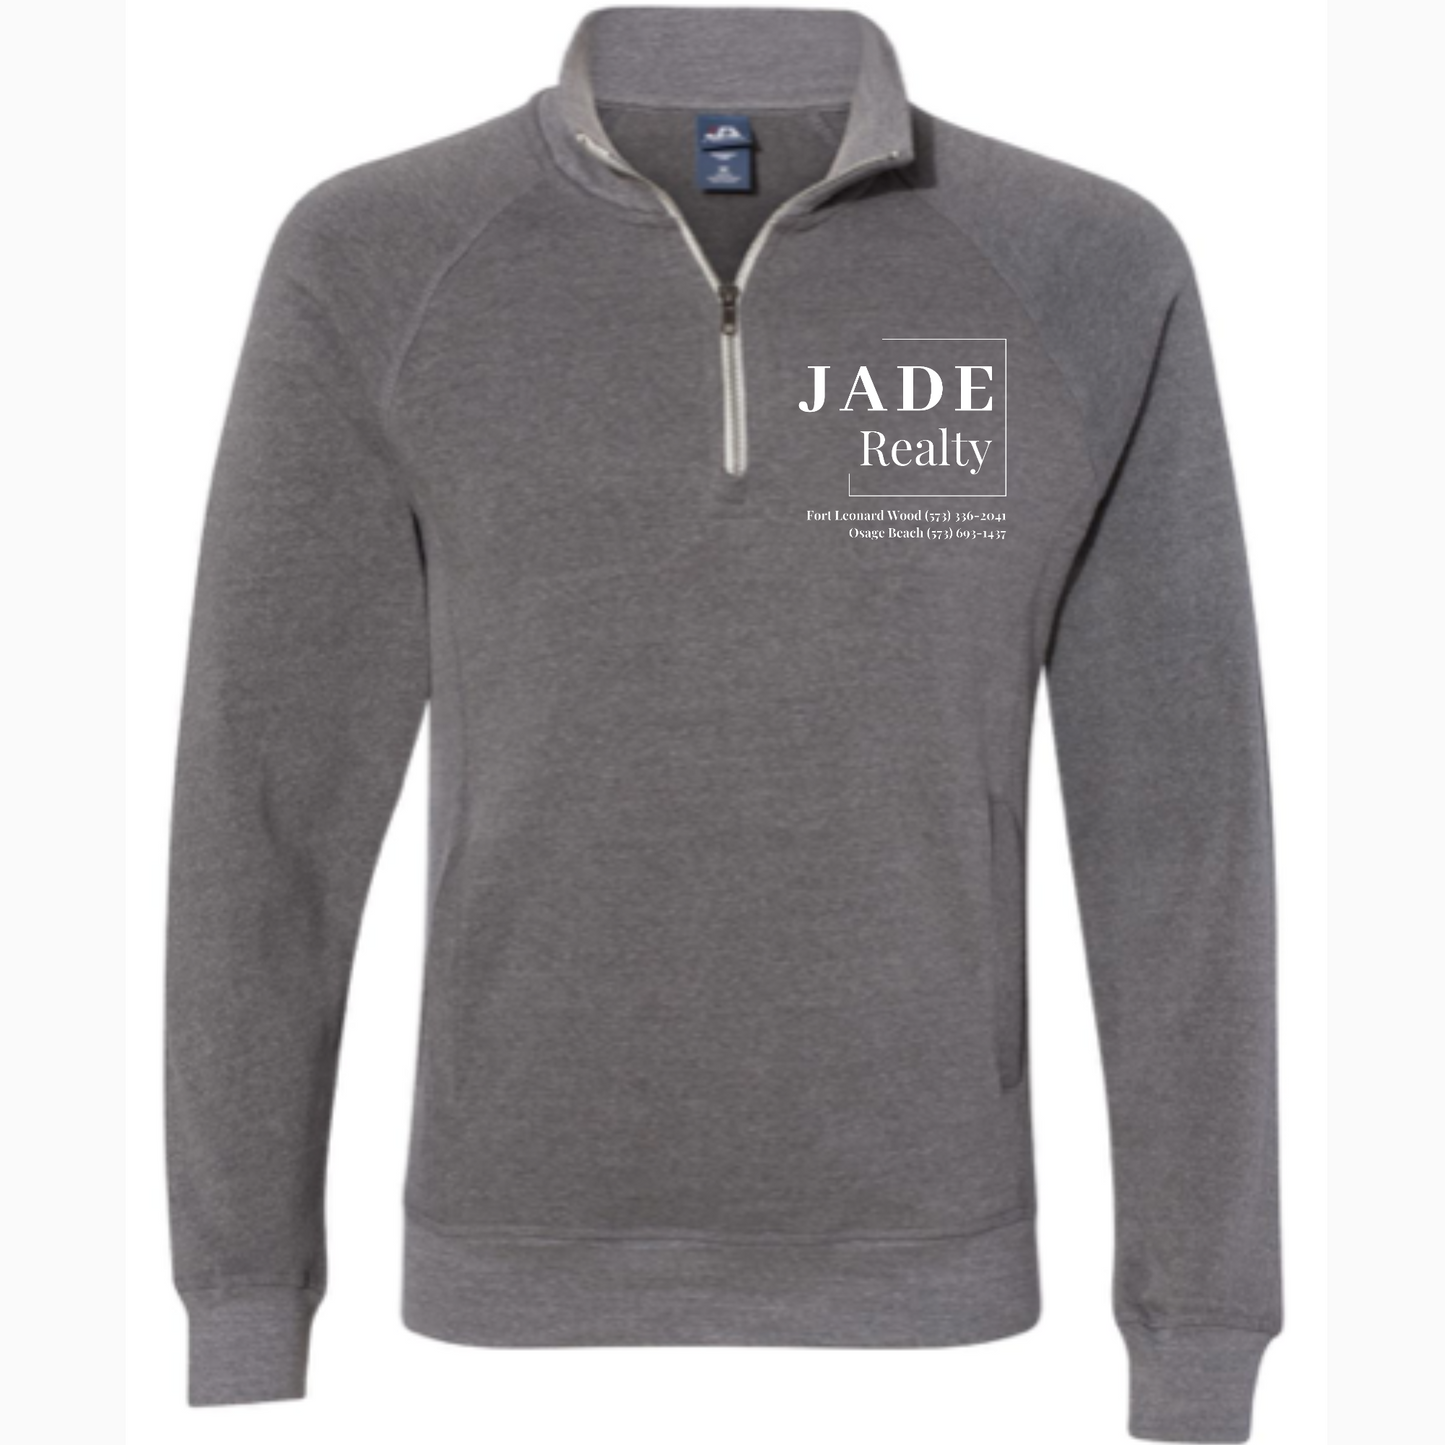 Jade Realty J. America - Triblend Quarter-Zip Sweatshirt